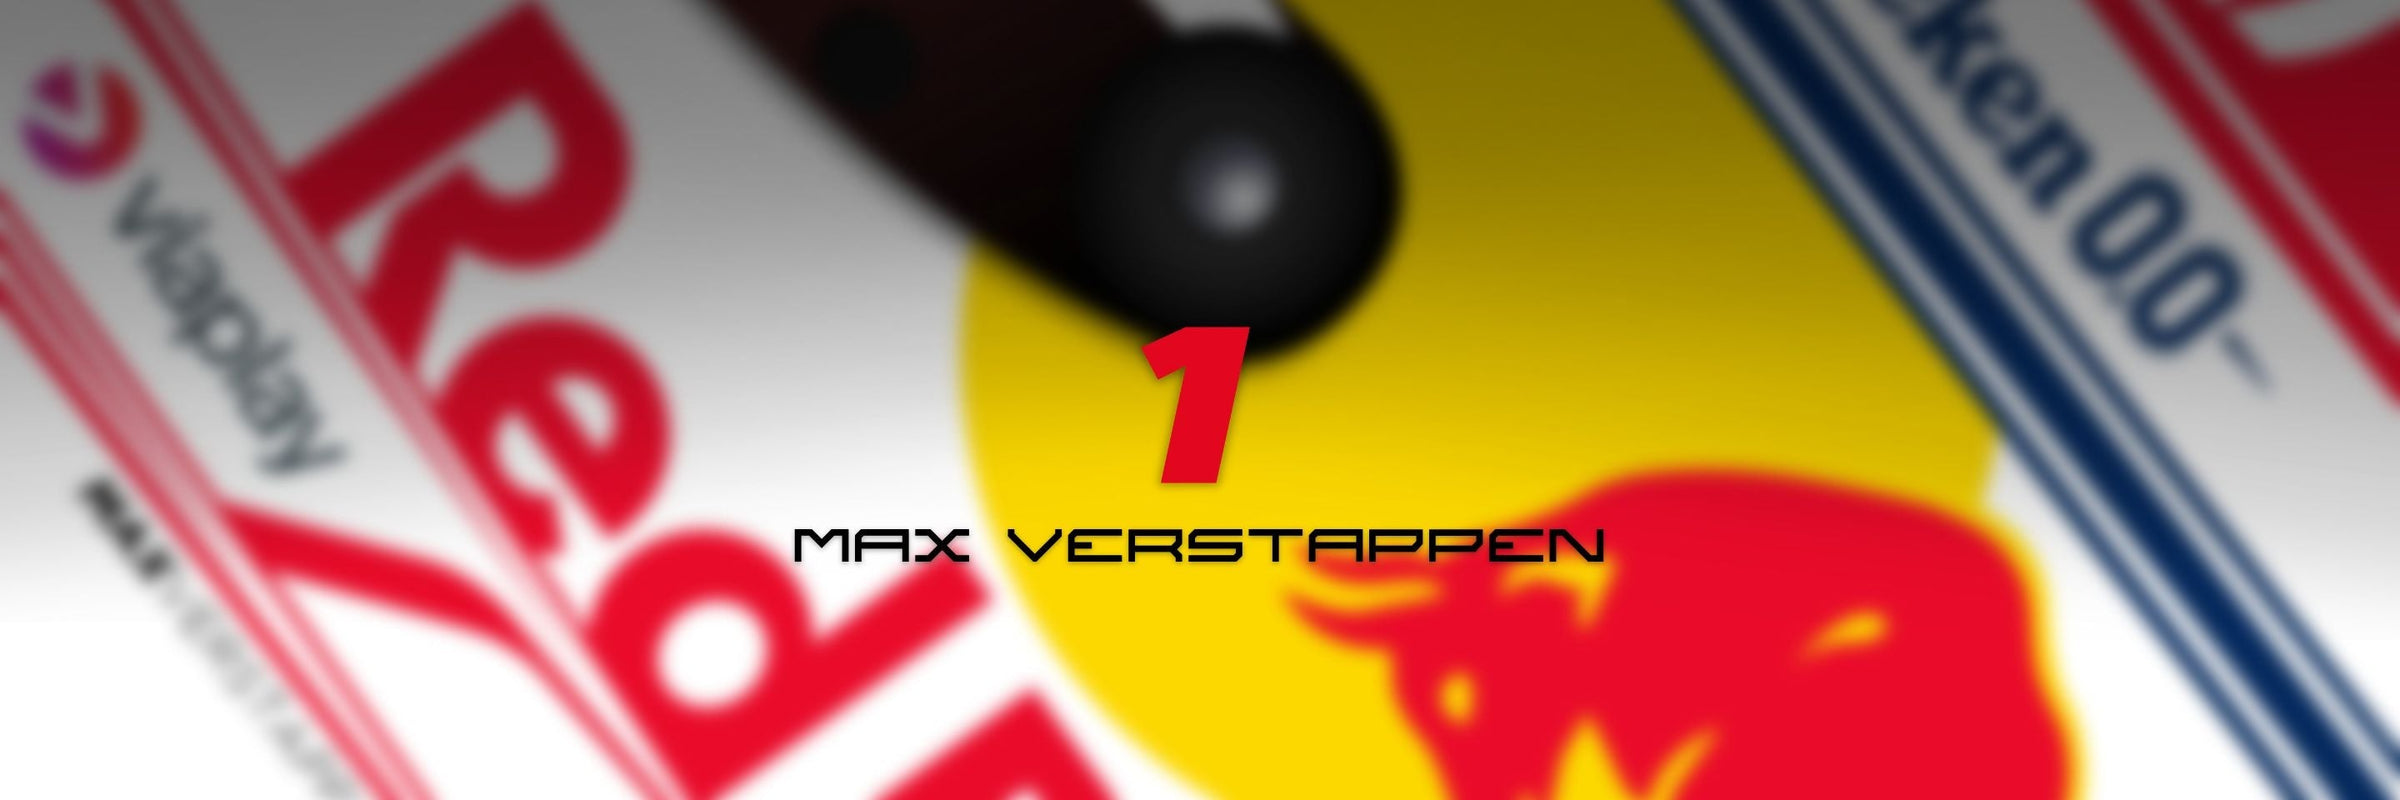 Max Verstappen - F1 and Motorpsort Offficial Merchandise - Fueler store